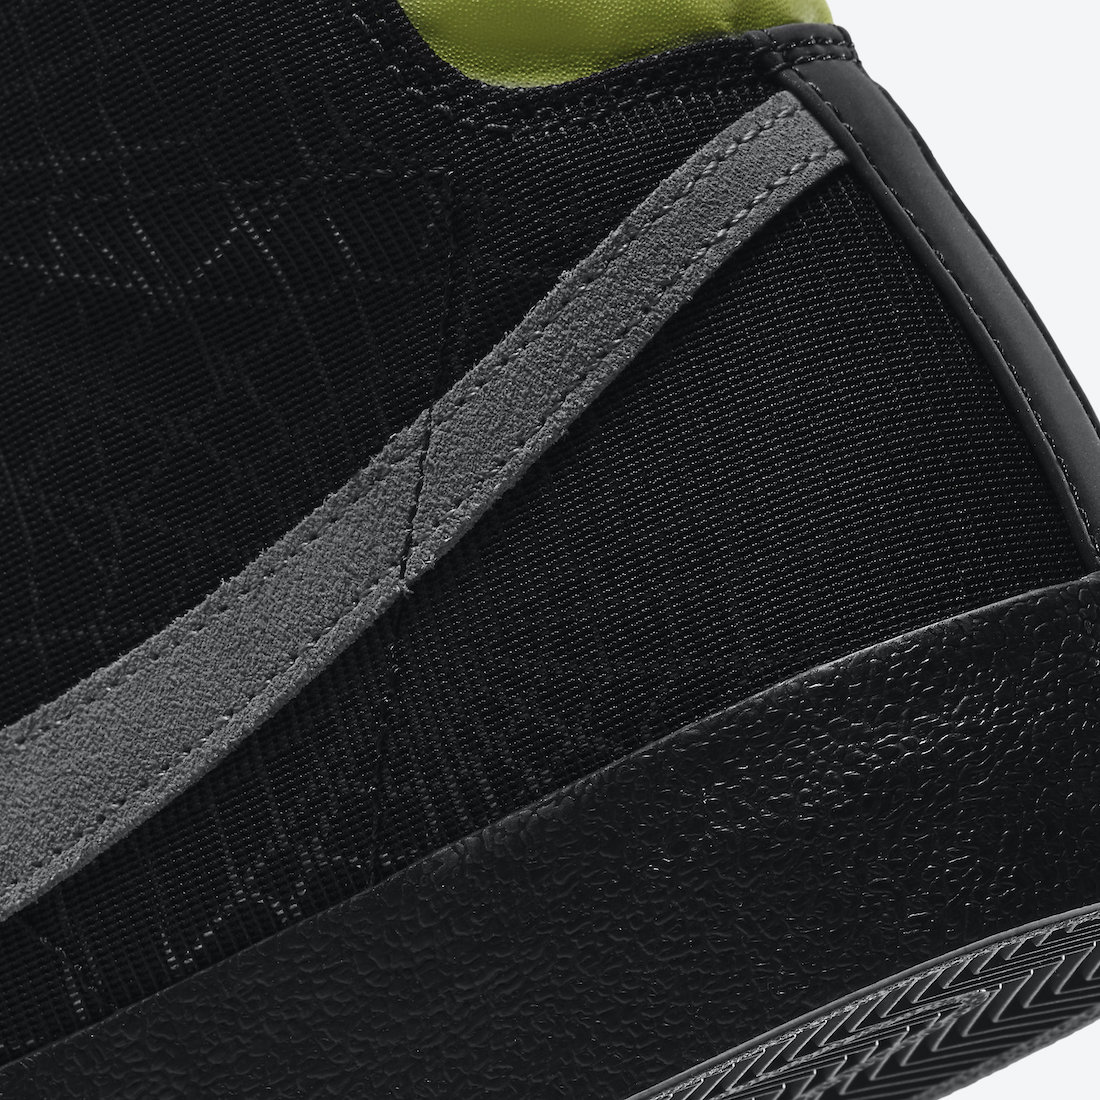 Nike Blazer Mid Spider Web DC1929-001 Release Date